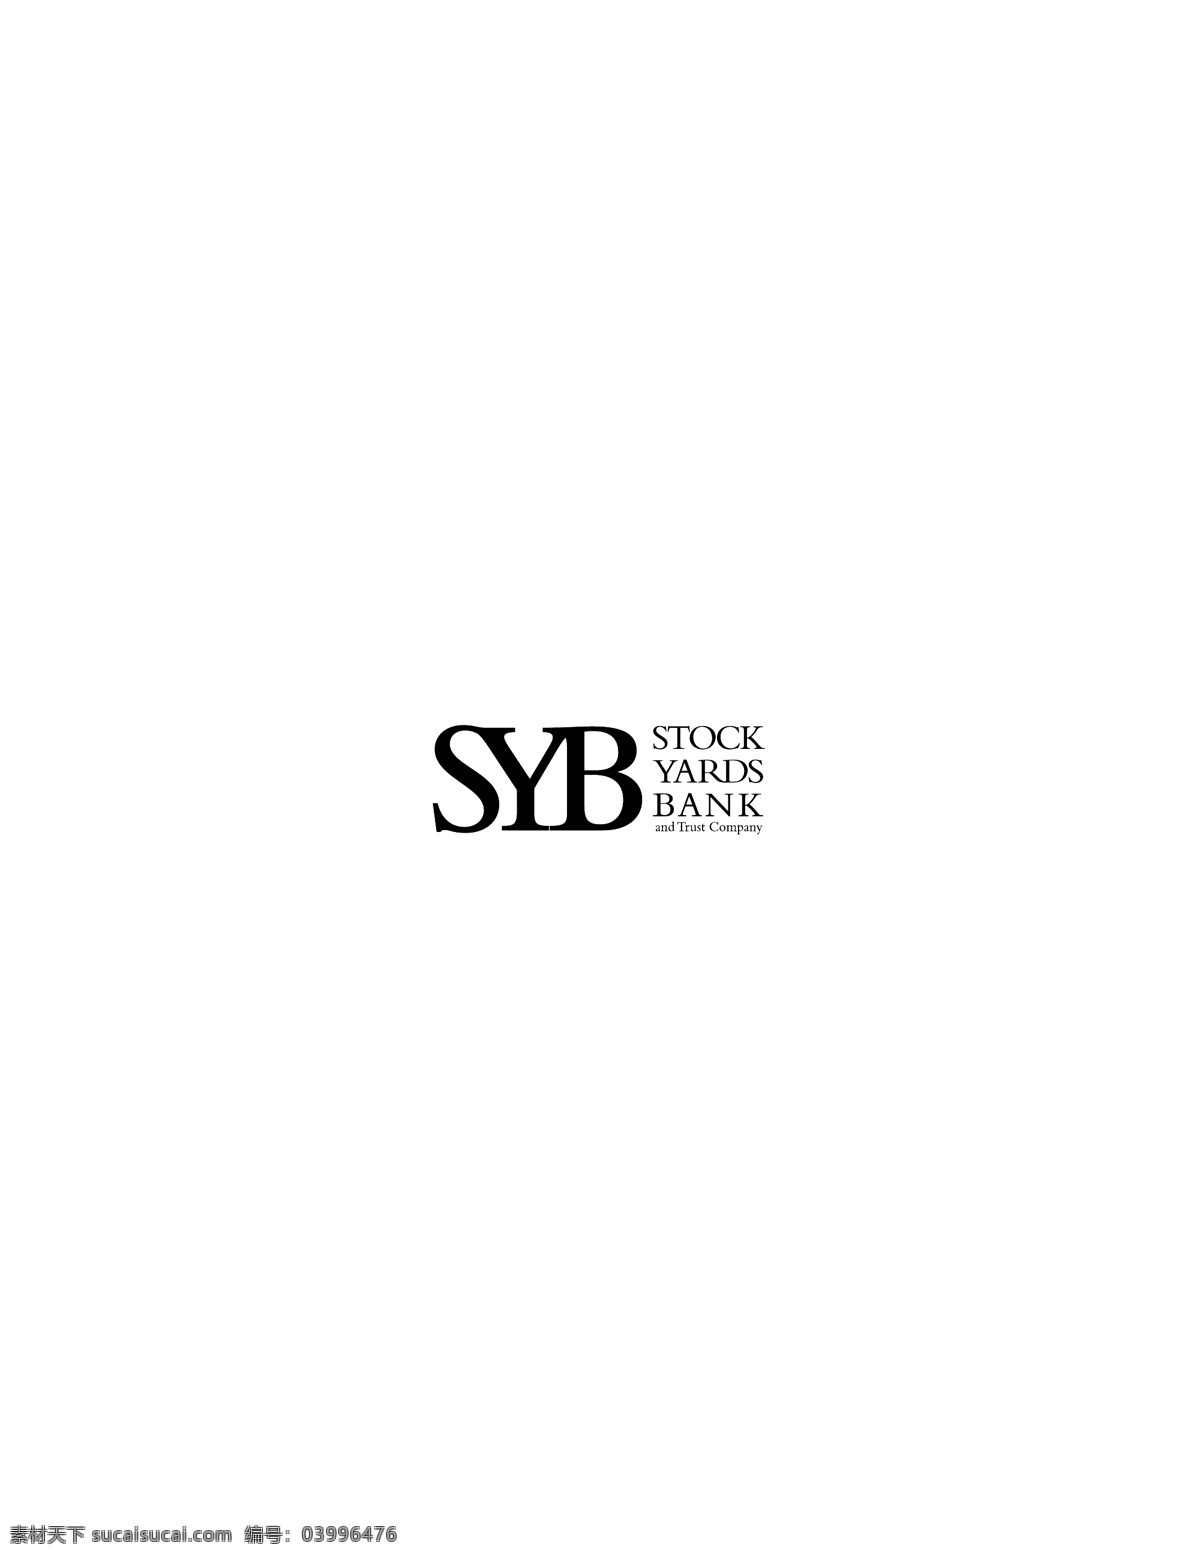 syb logo大全 logo 设计欣赏 商业矢量 矢量下载 金融业 标志 标志设计 欣赏 网页矢量 矢量图 其他矢量图